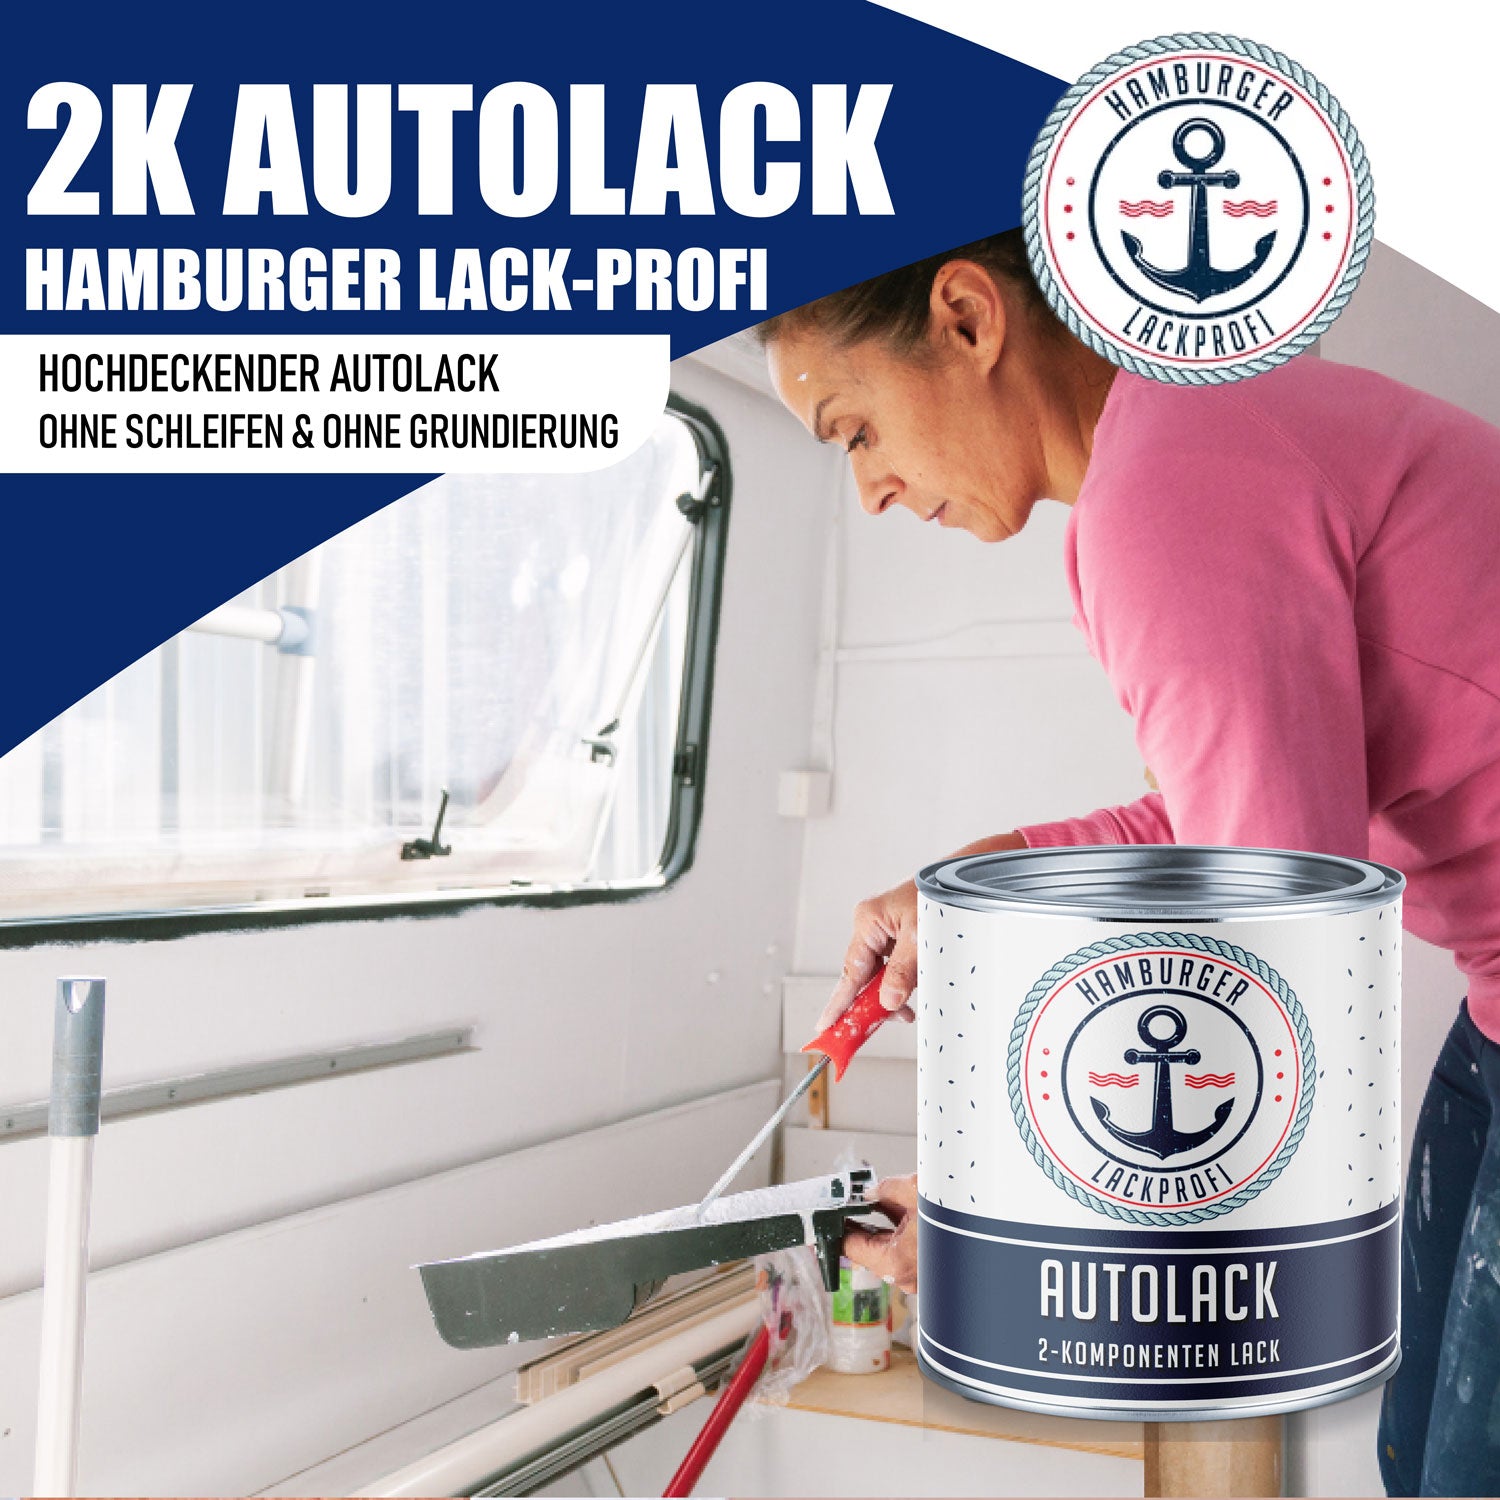 Hamburger Lack-Profi 2K Autolack in Olivbraun RAL 8008 mit Lackierset (X300) & Verdünnung (1 L) - 30% Sparangebot